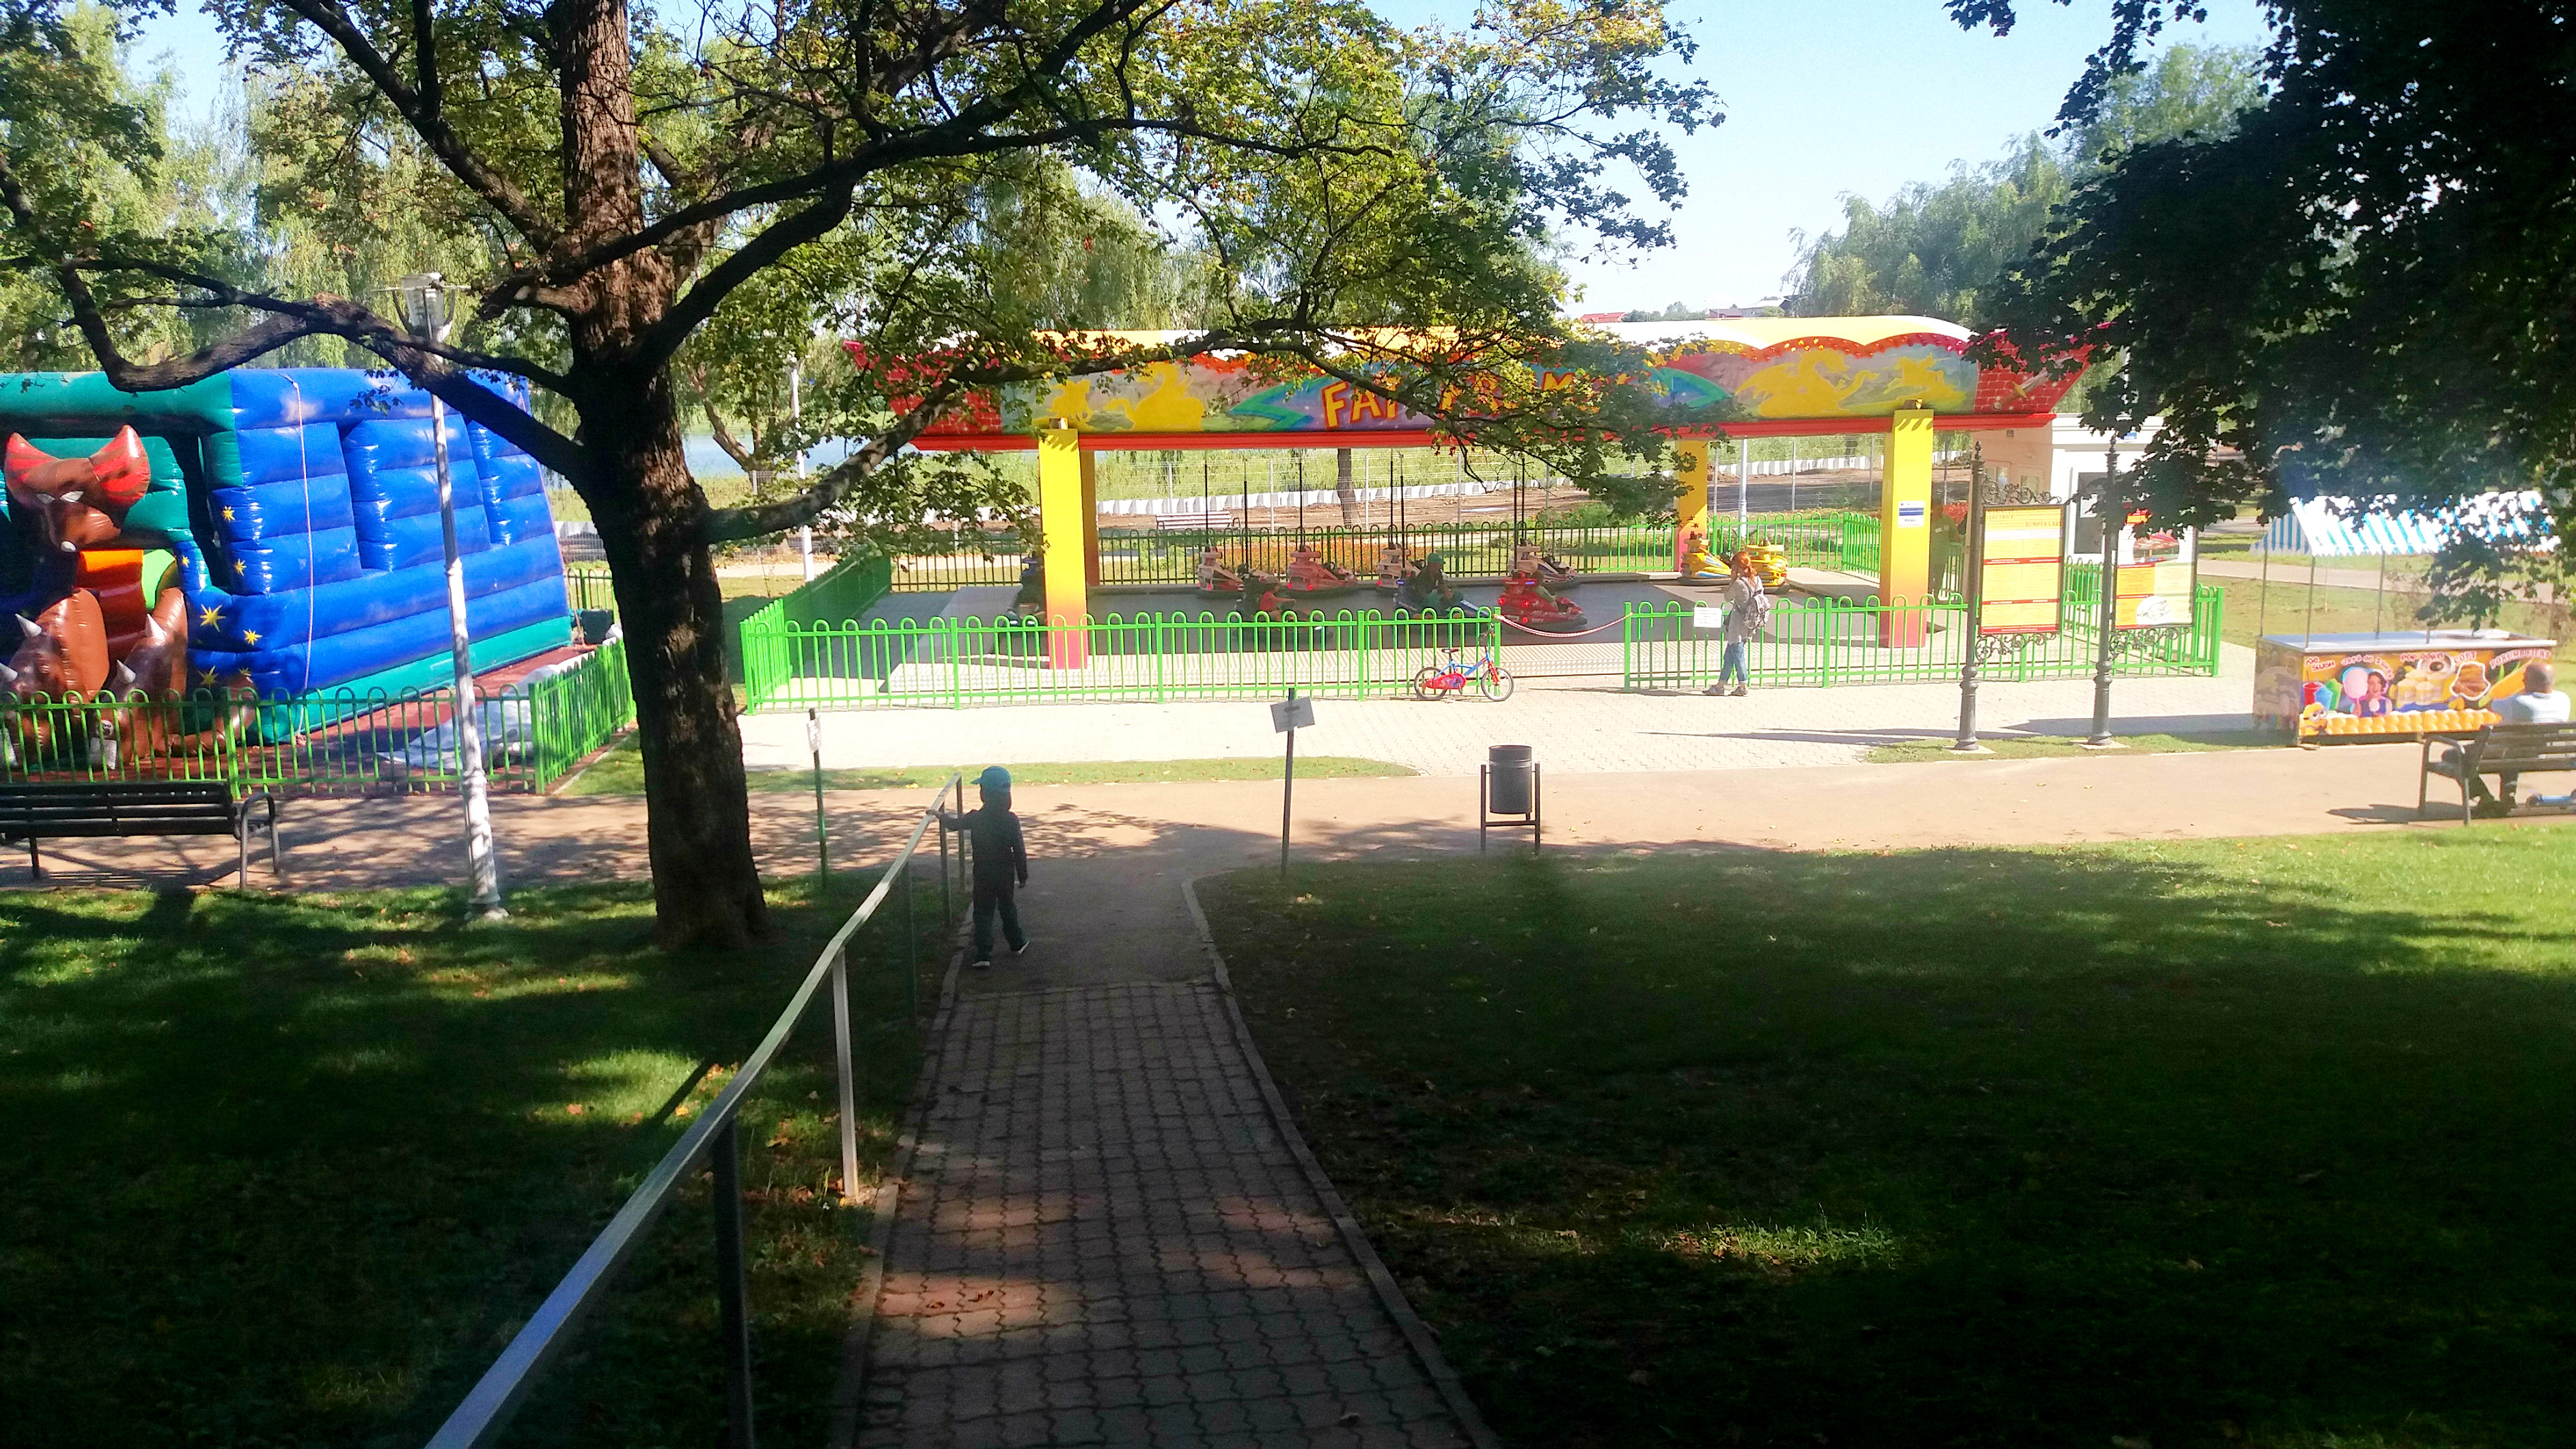 New #ferris #wheel and amusement #park in #Bucharest, #Romania - #travel, #Europe, #fun, #kids